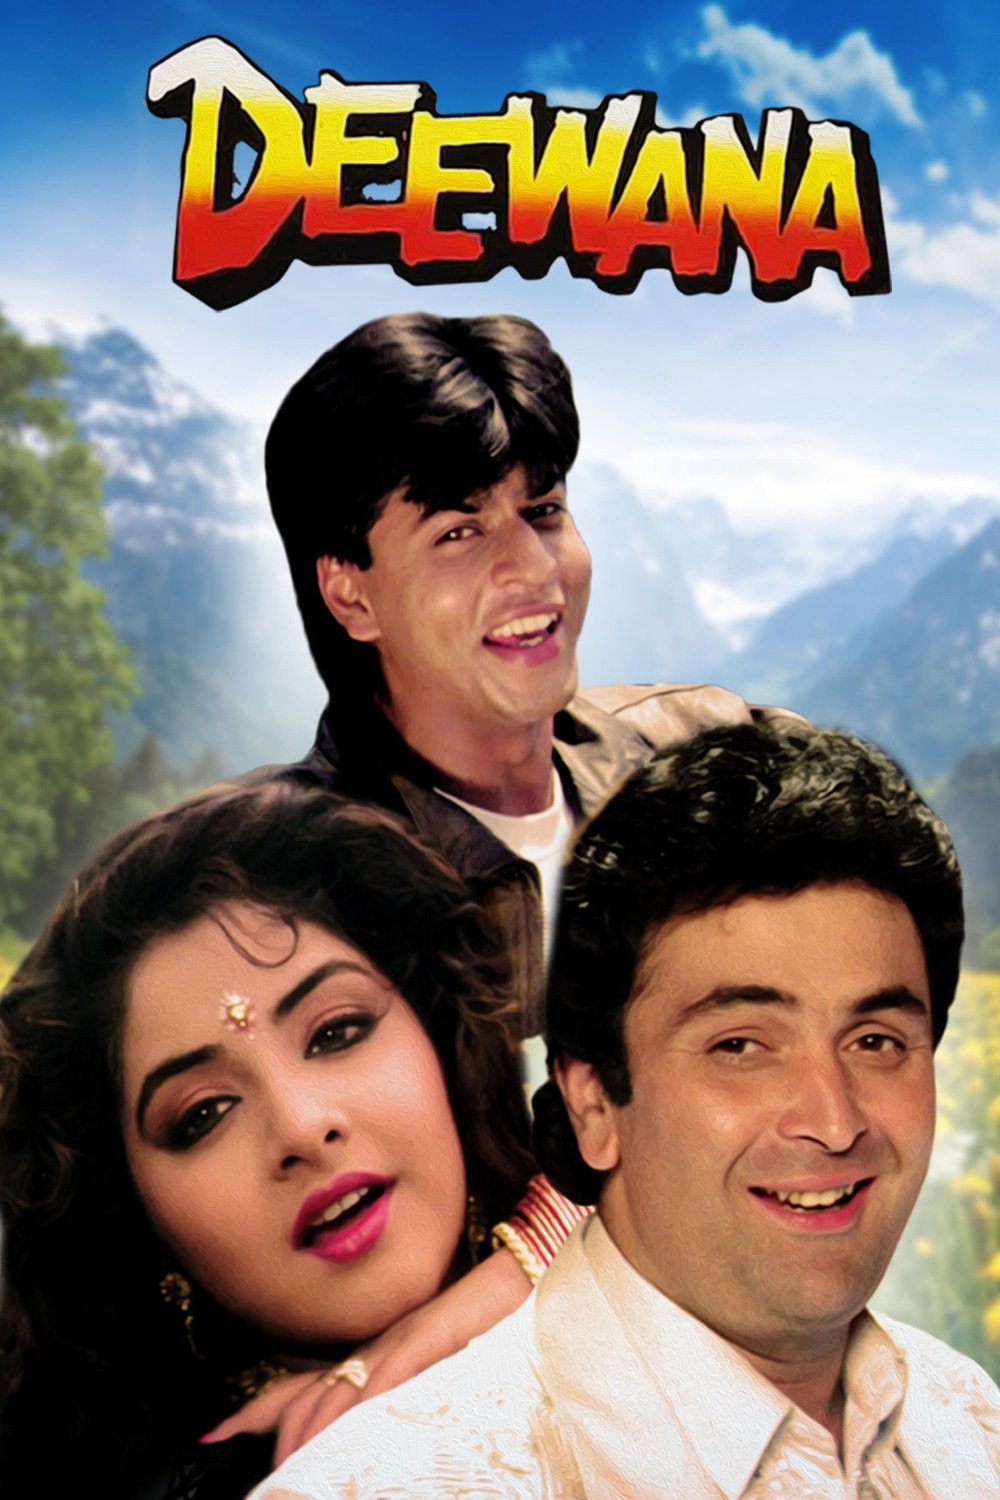 Hindi poster of the movie Deewana